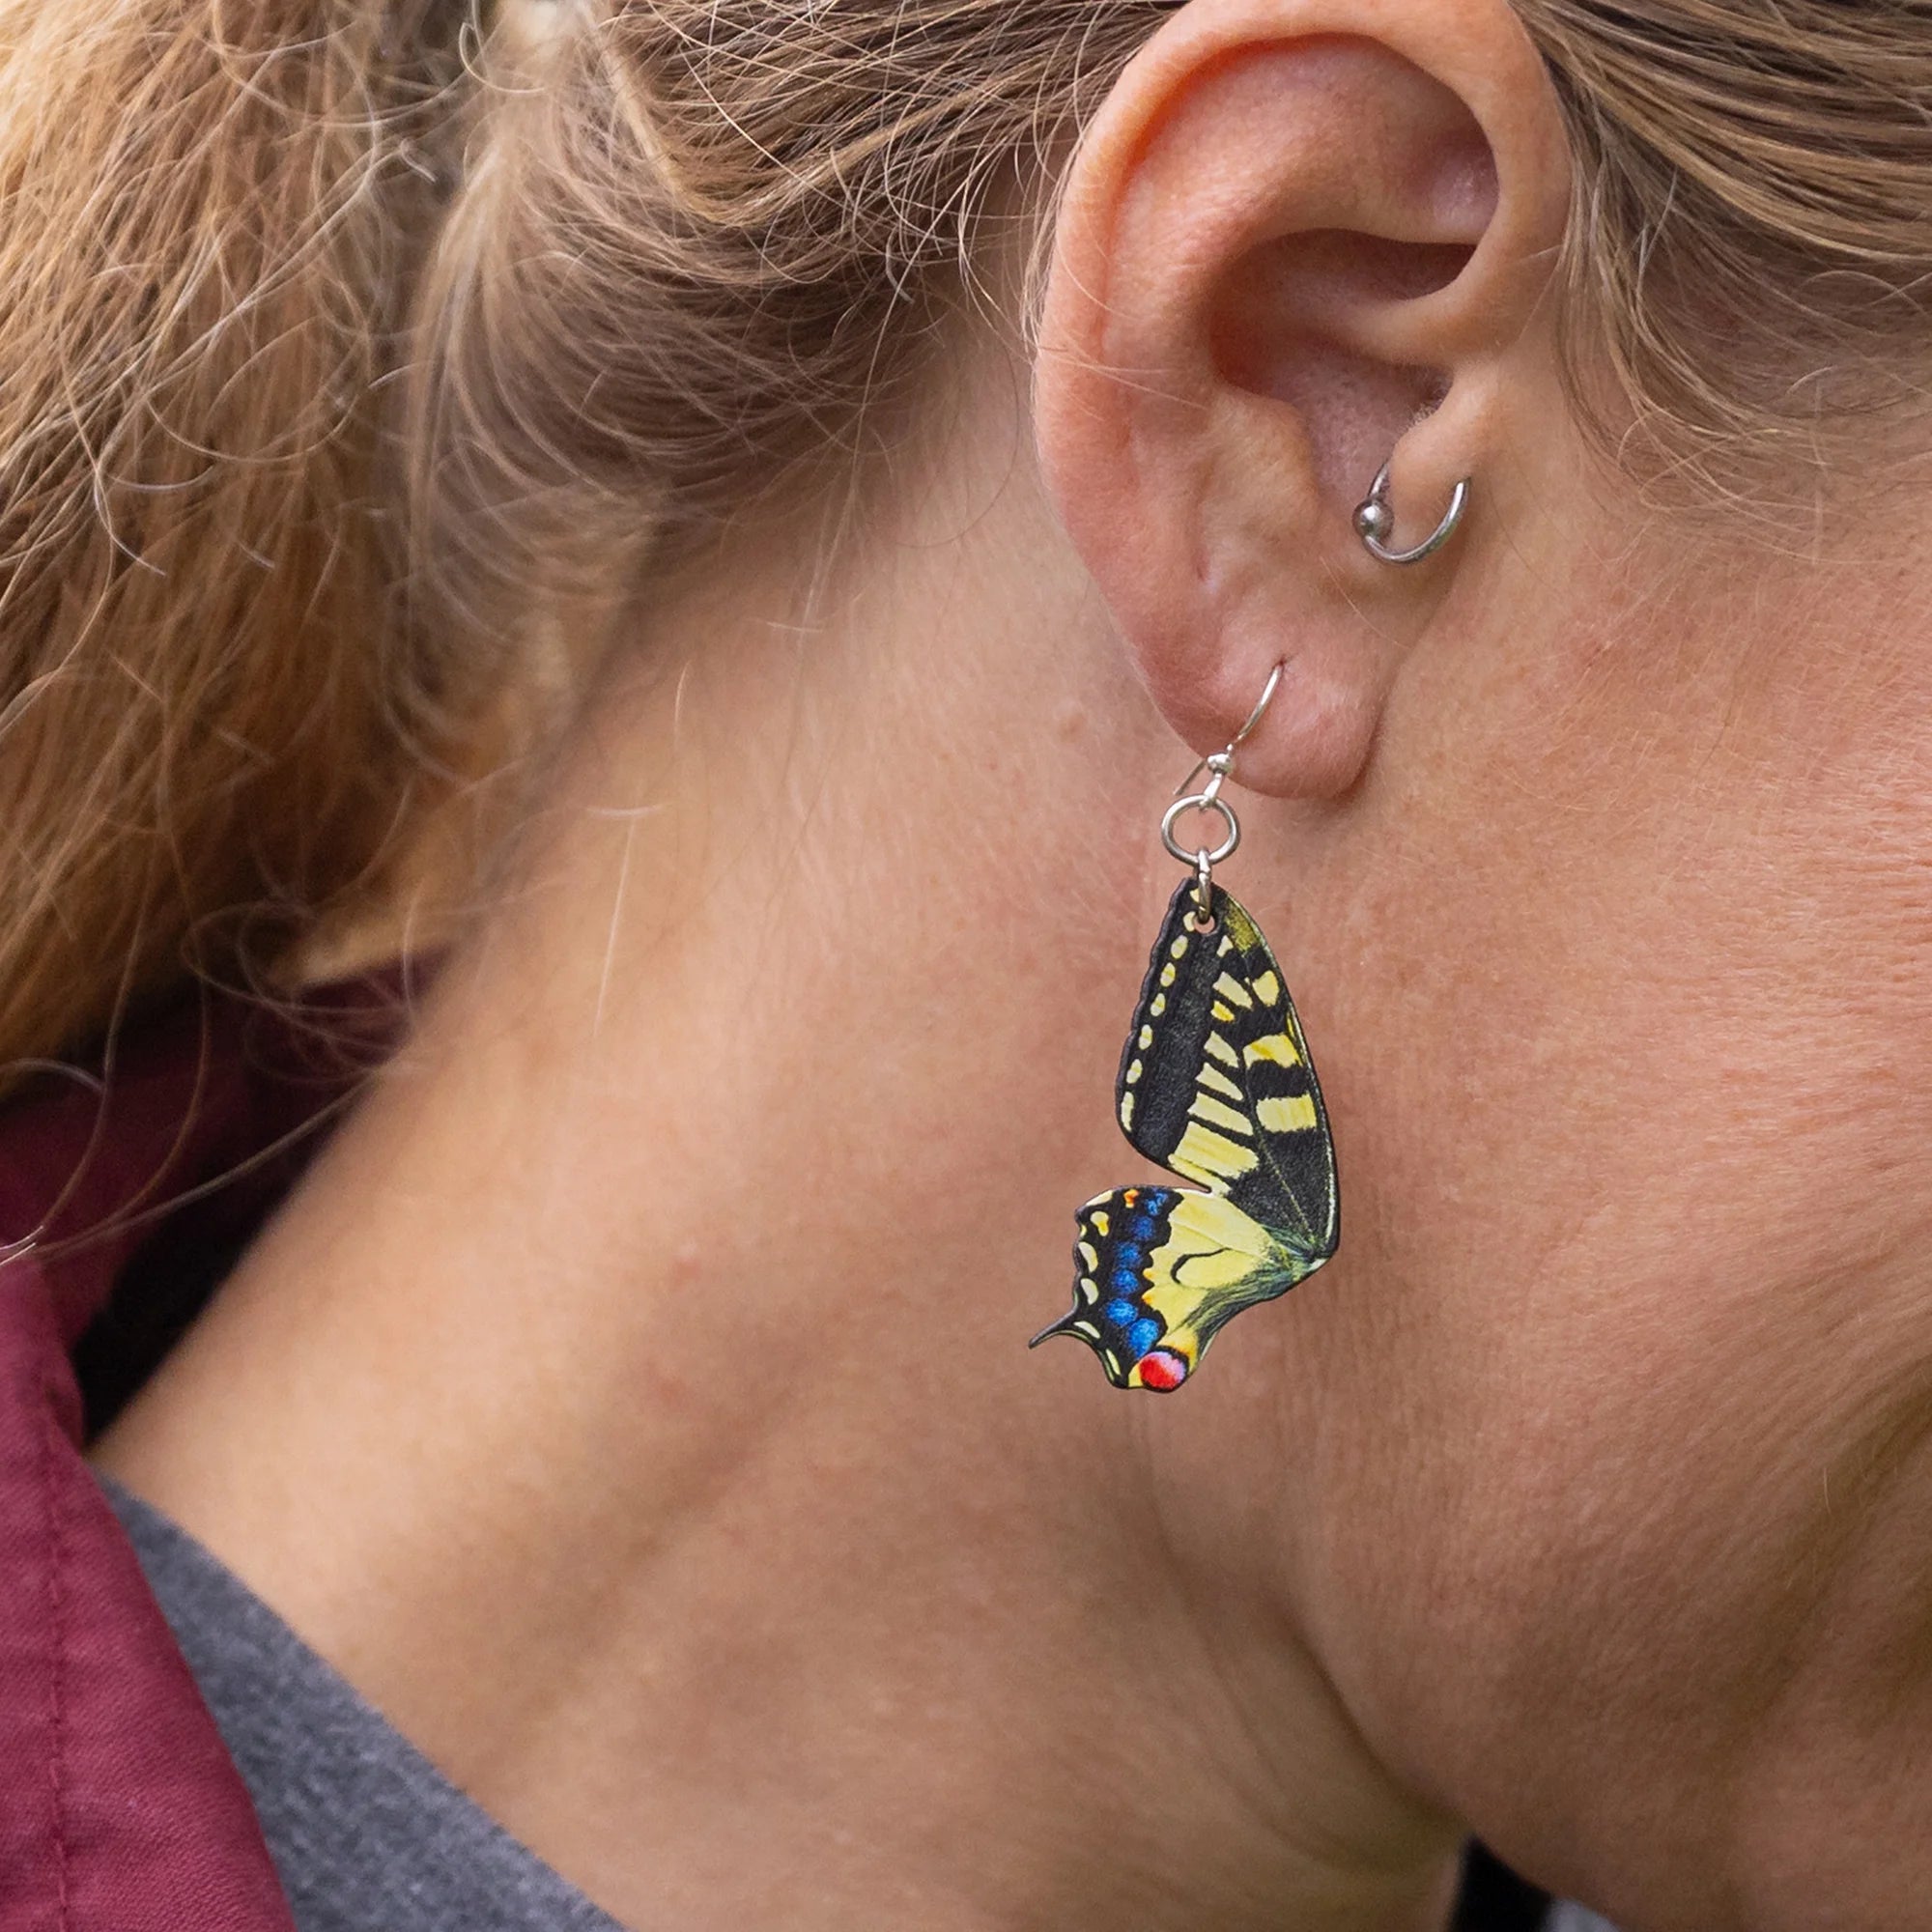 Swallowtail Butterfly Earrings in Yellow color